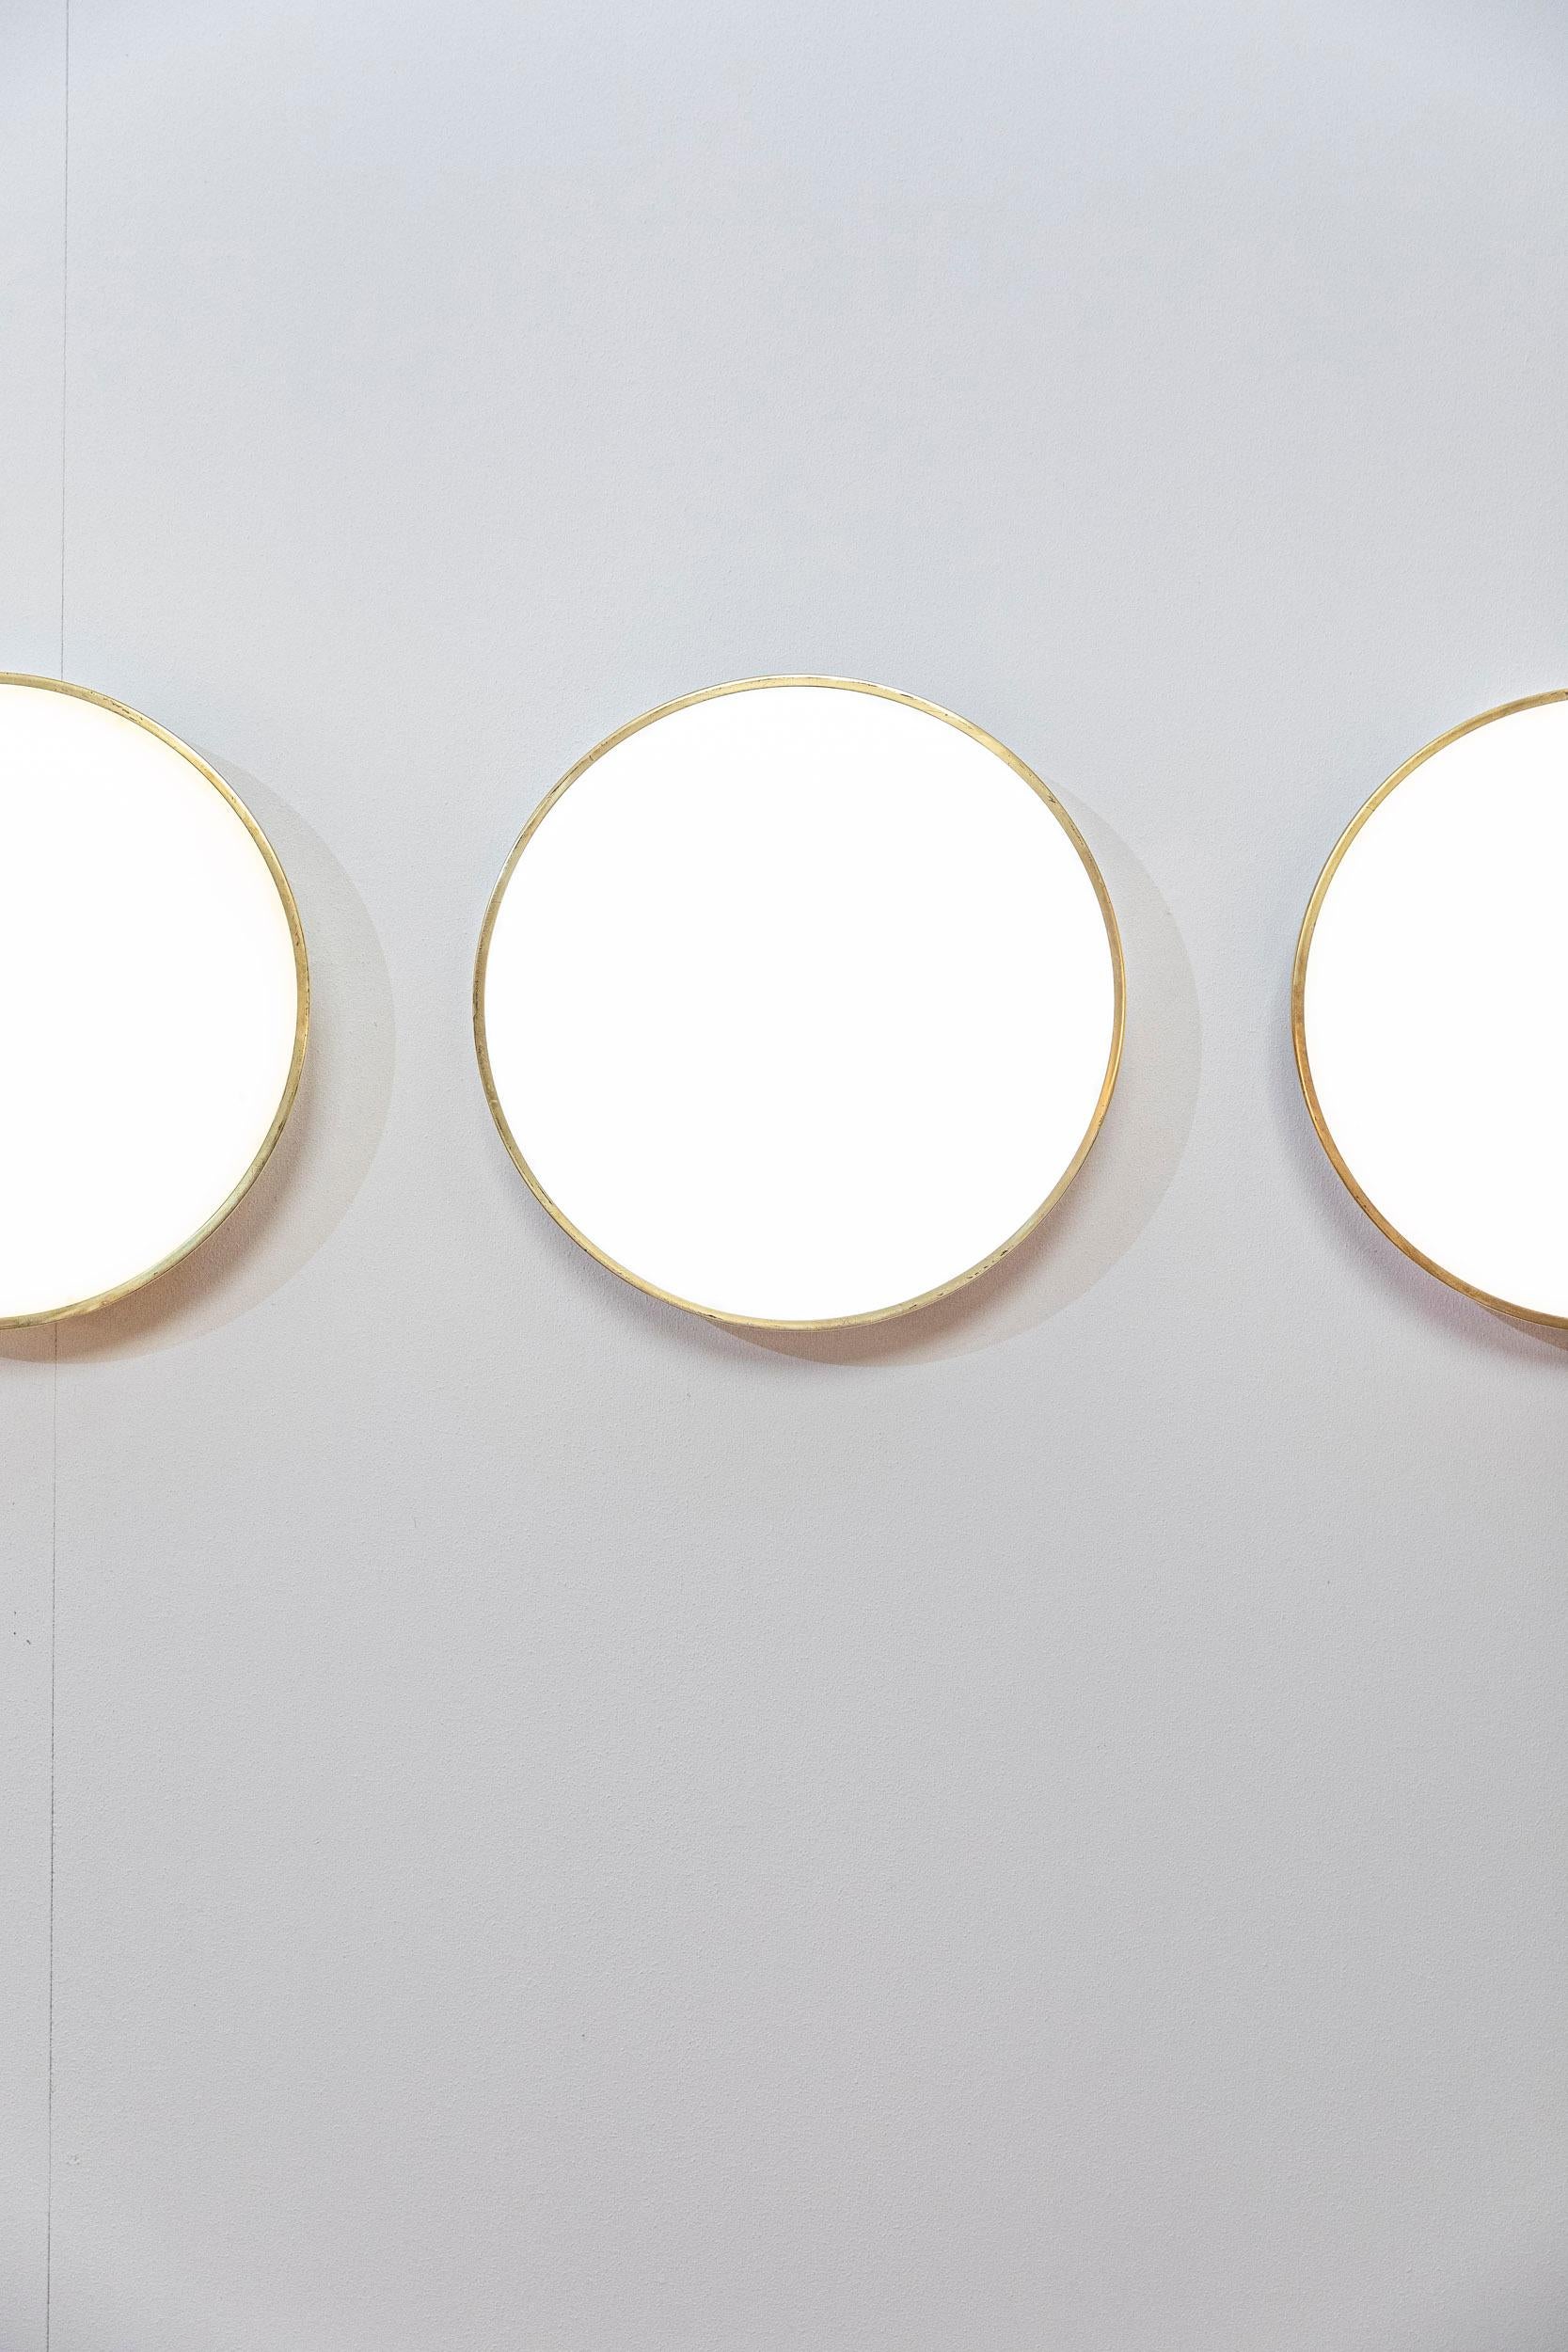 Mid-20th Century Set of three Munkegaard Ceiling Light by Arne Jacobsen for Louis Poulsen